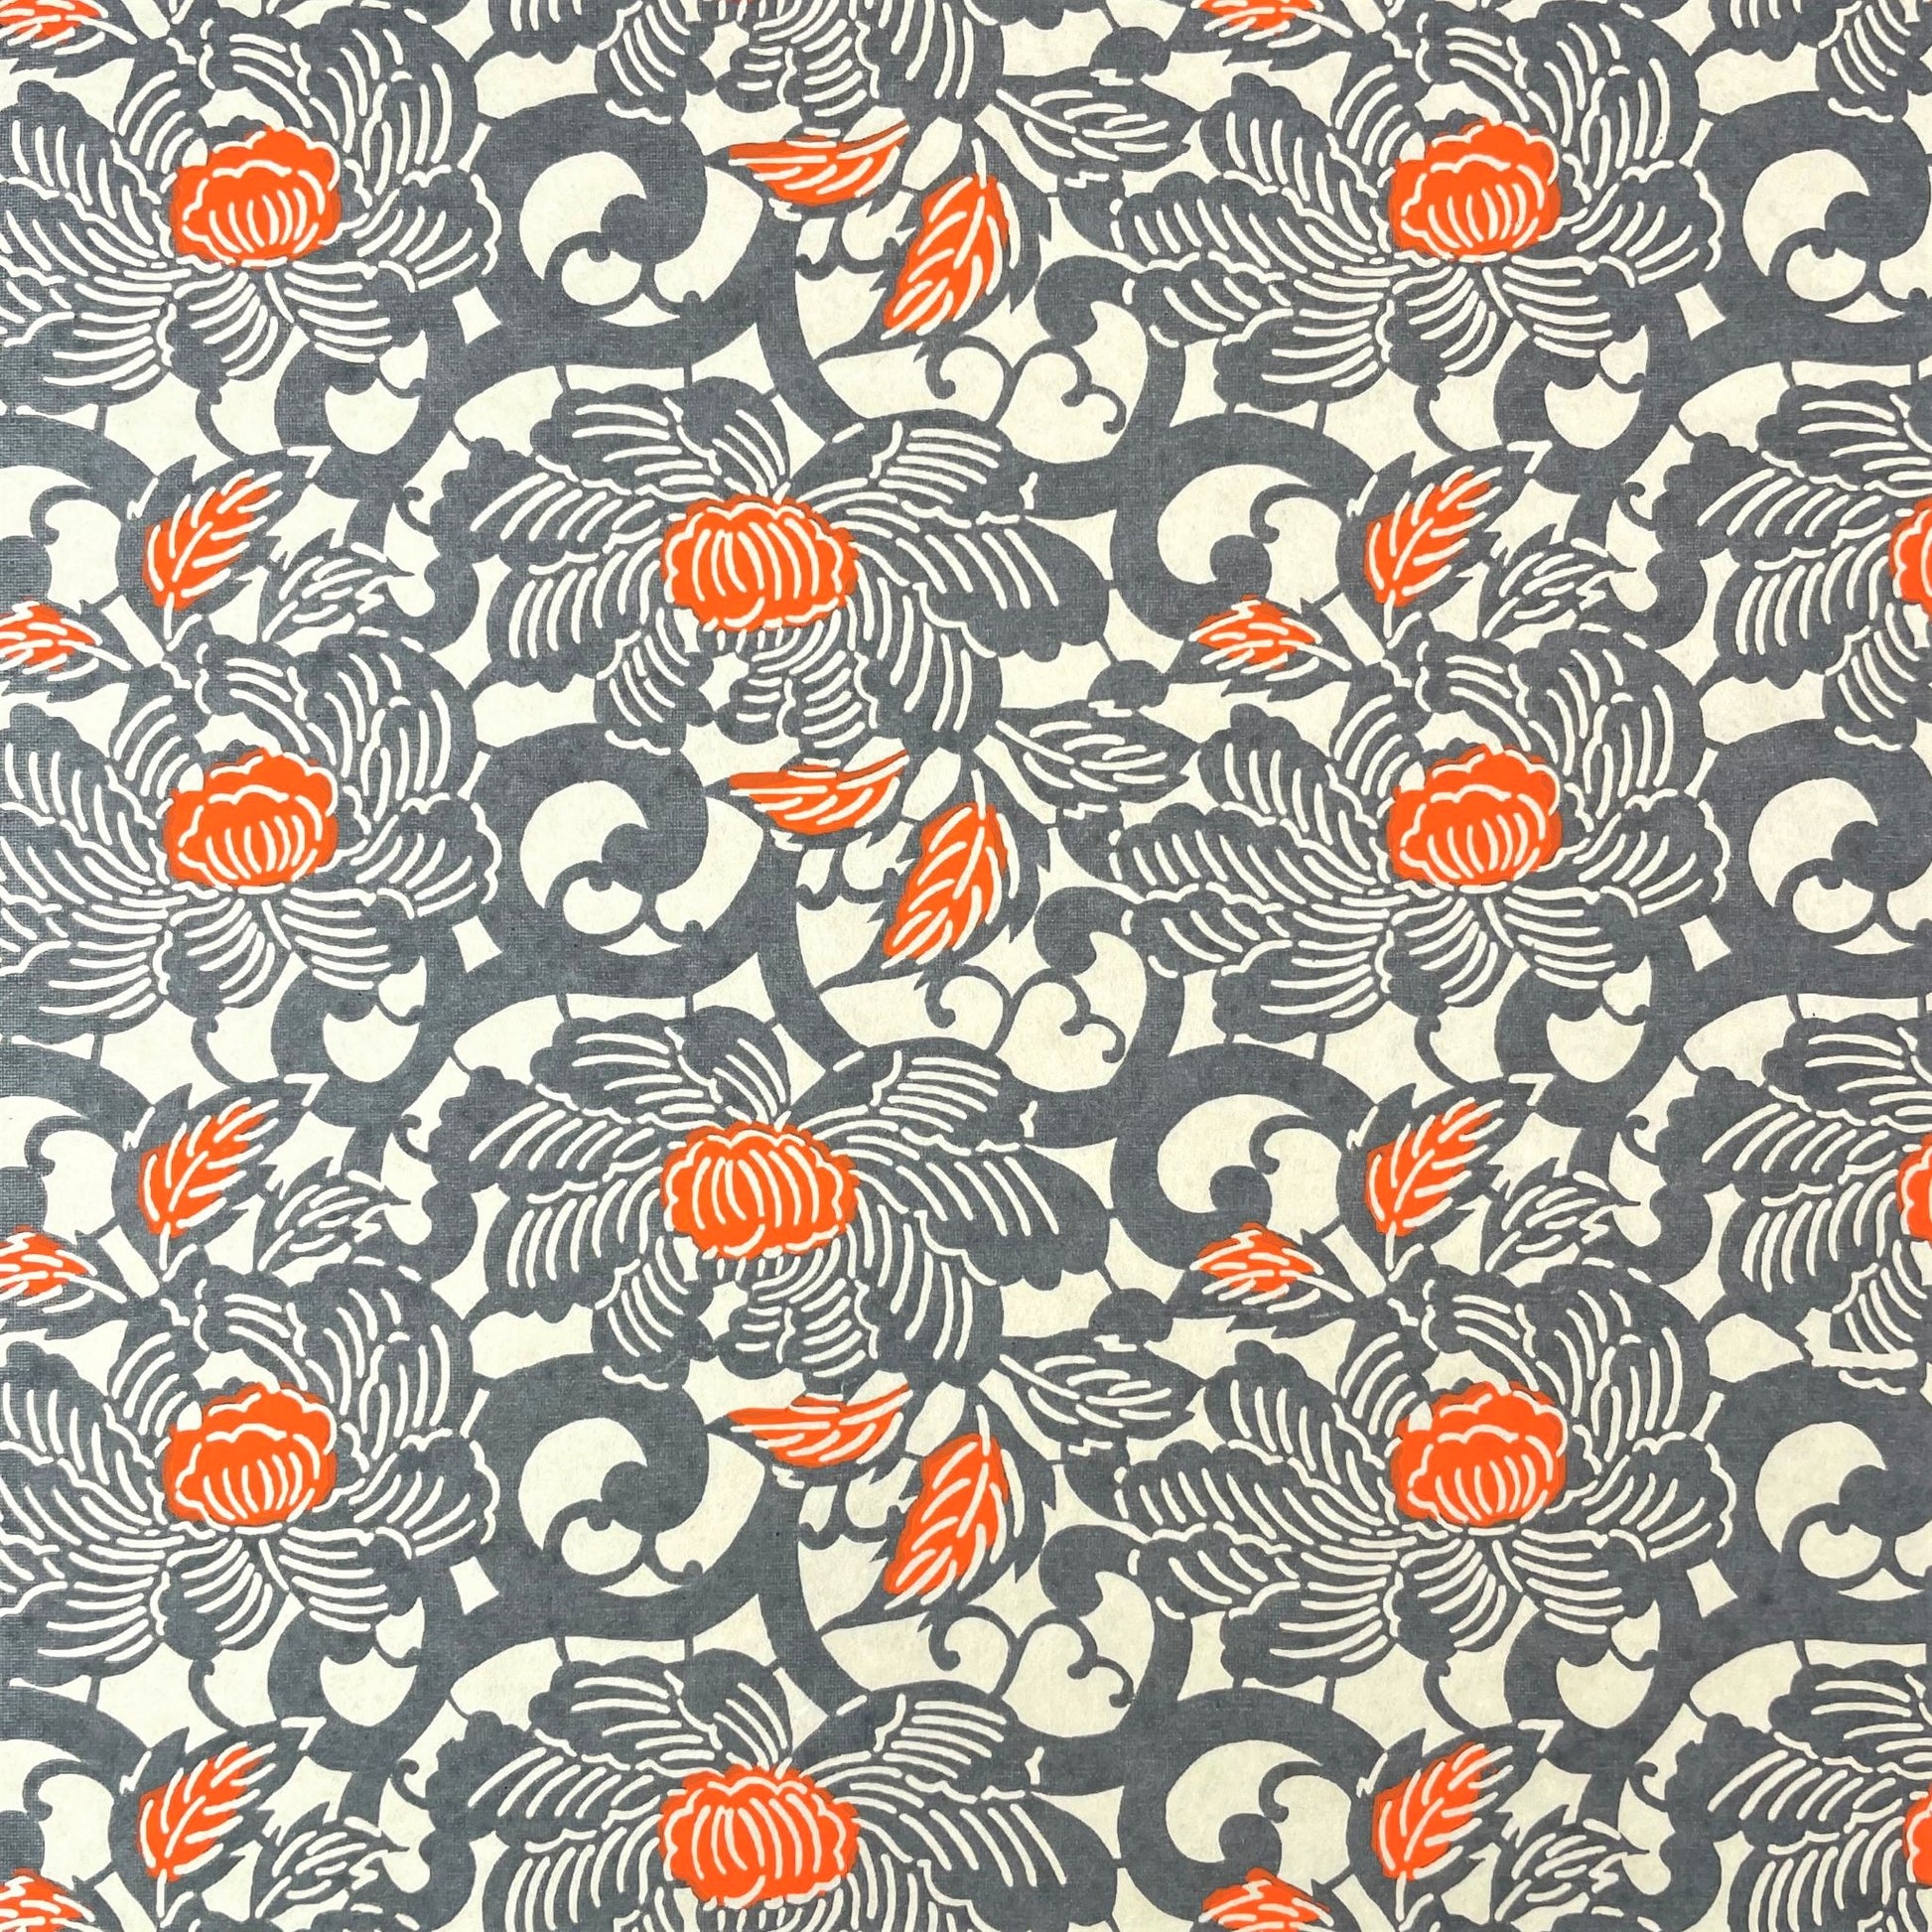 japanese silk-screen handmade paper showing grey and orange peony flower repeat pattern